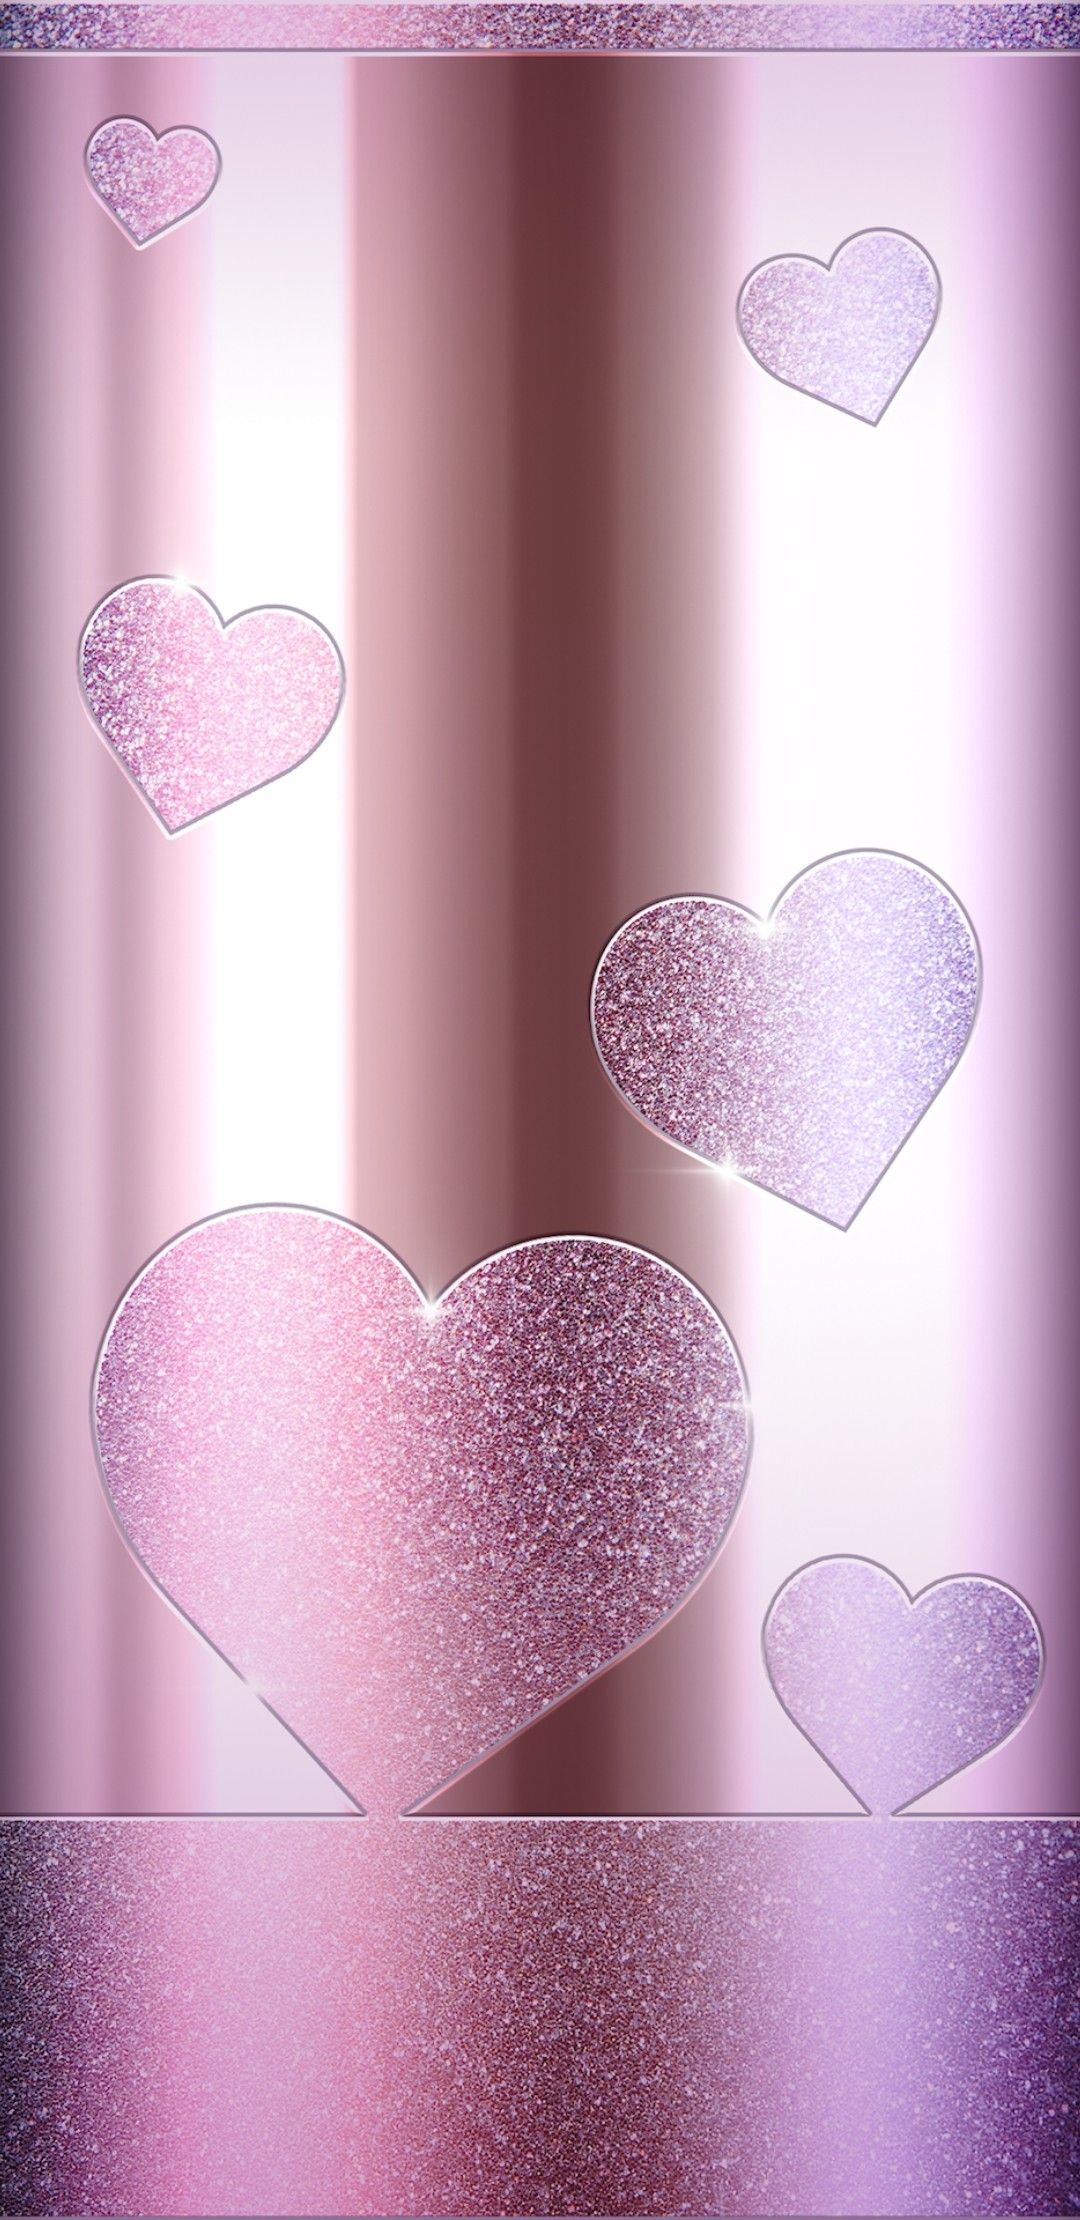 Free download Pretty in Pink Pinterest wallpaper Heart wallpaper Bling